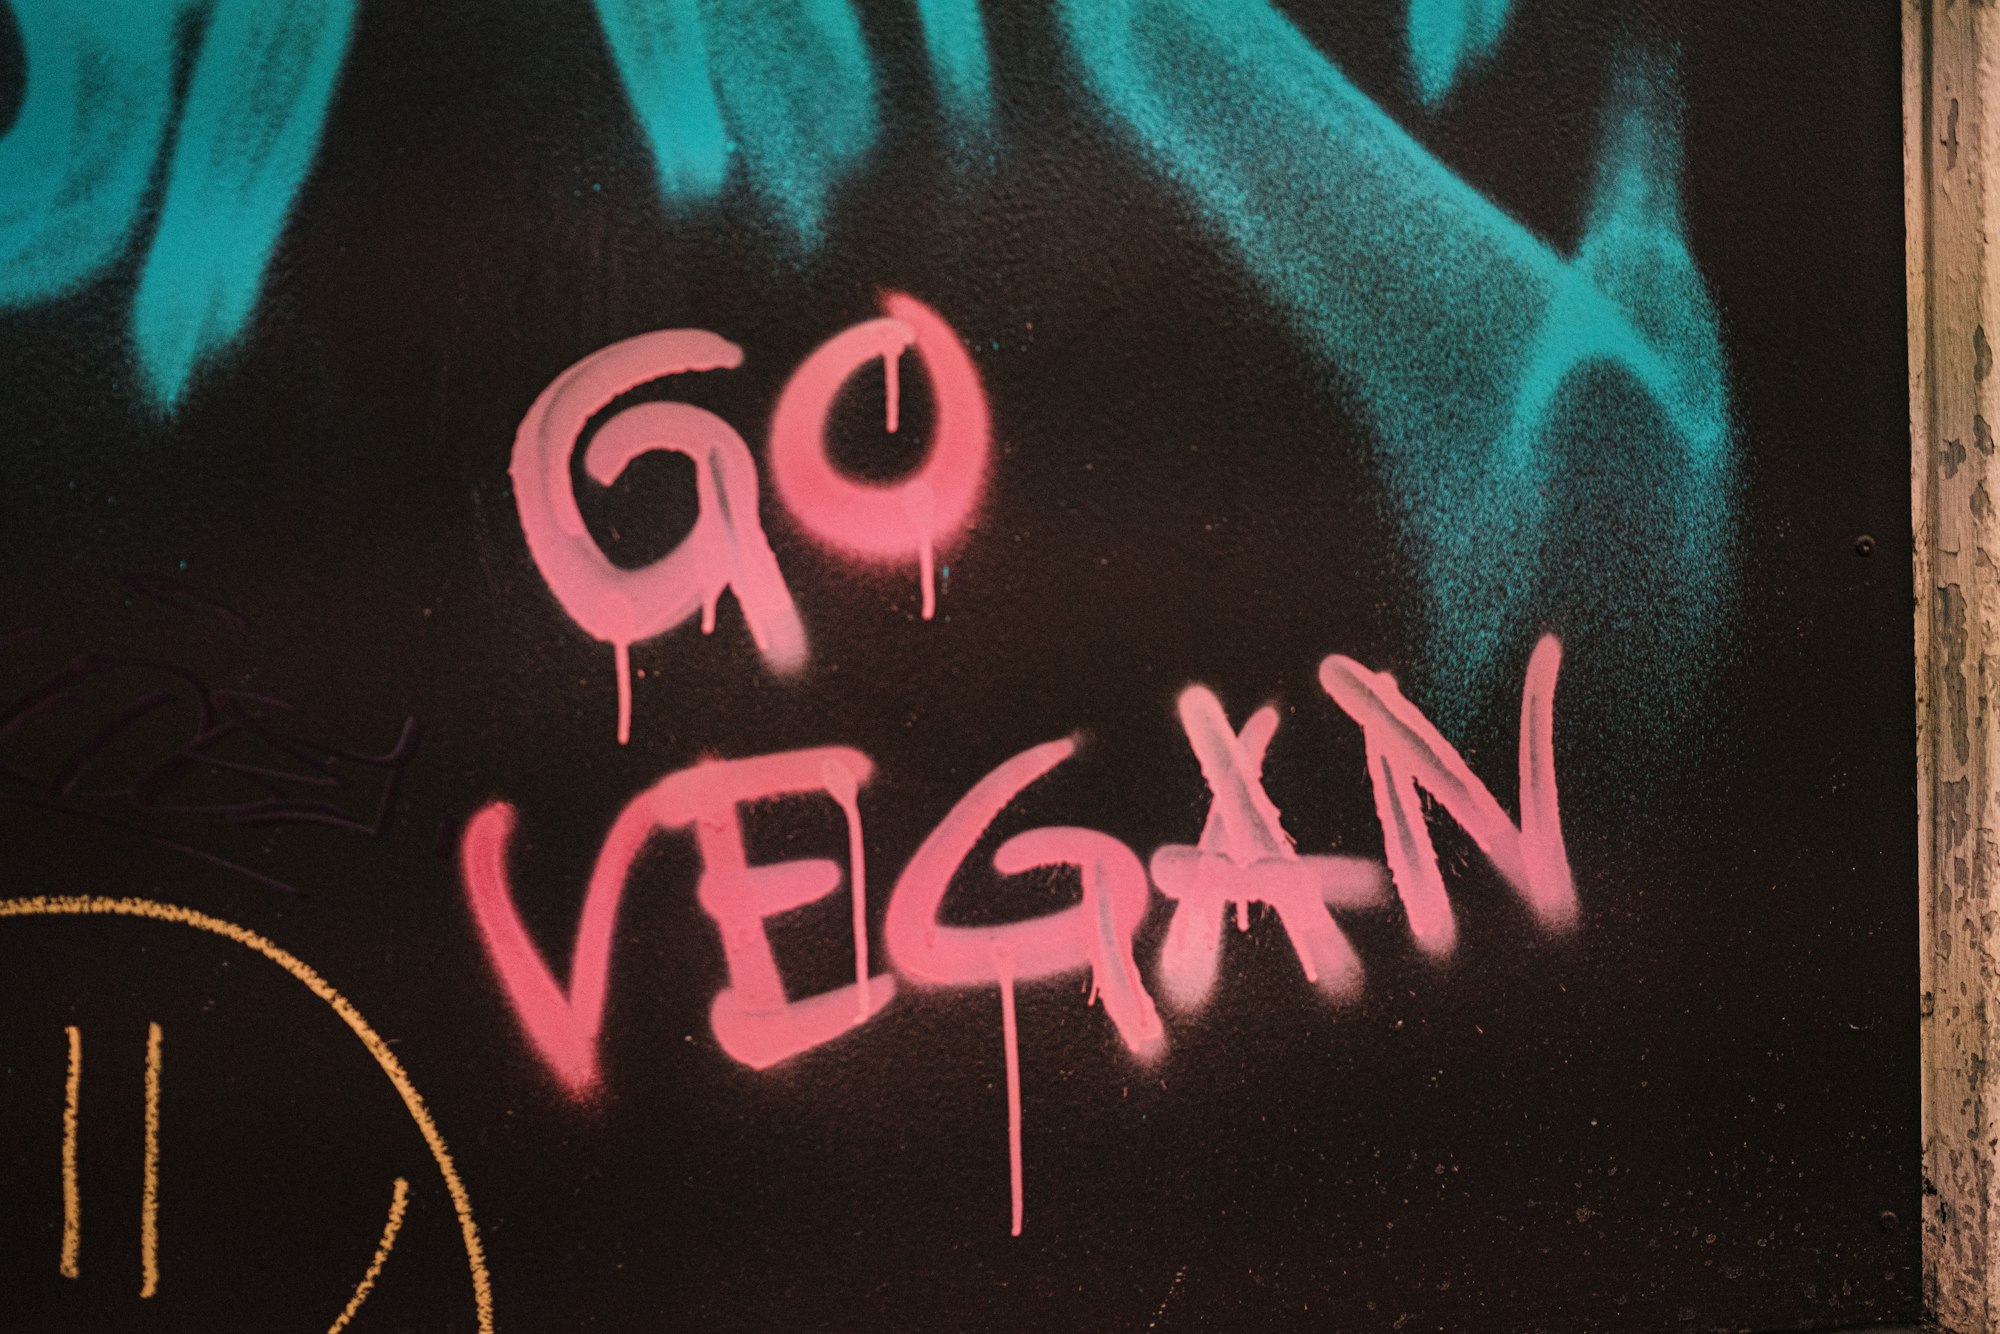 The Top 7 Vegan Classes For Veganuary 2022